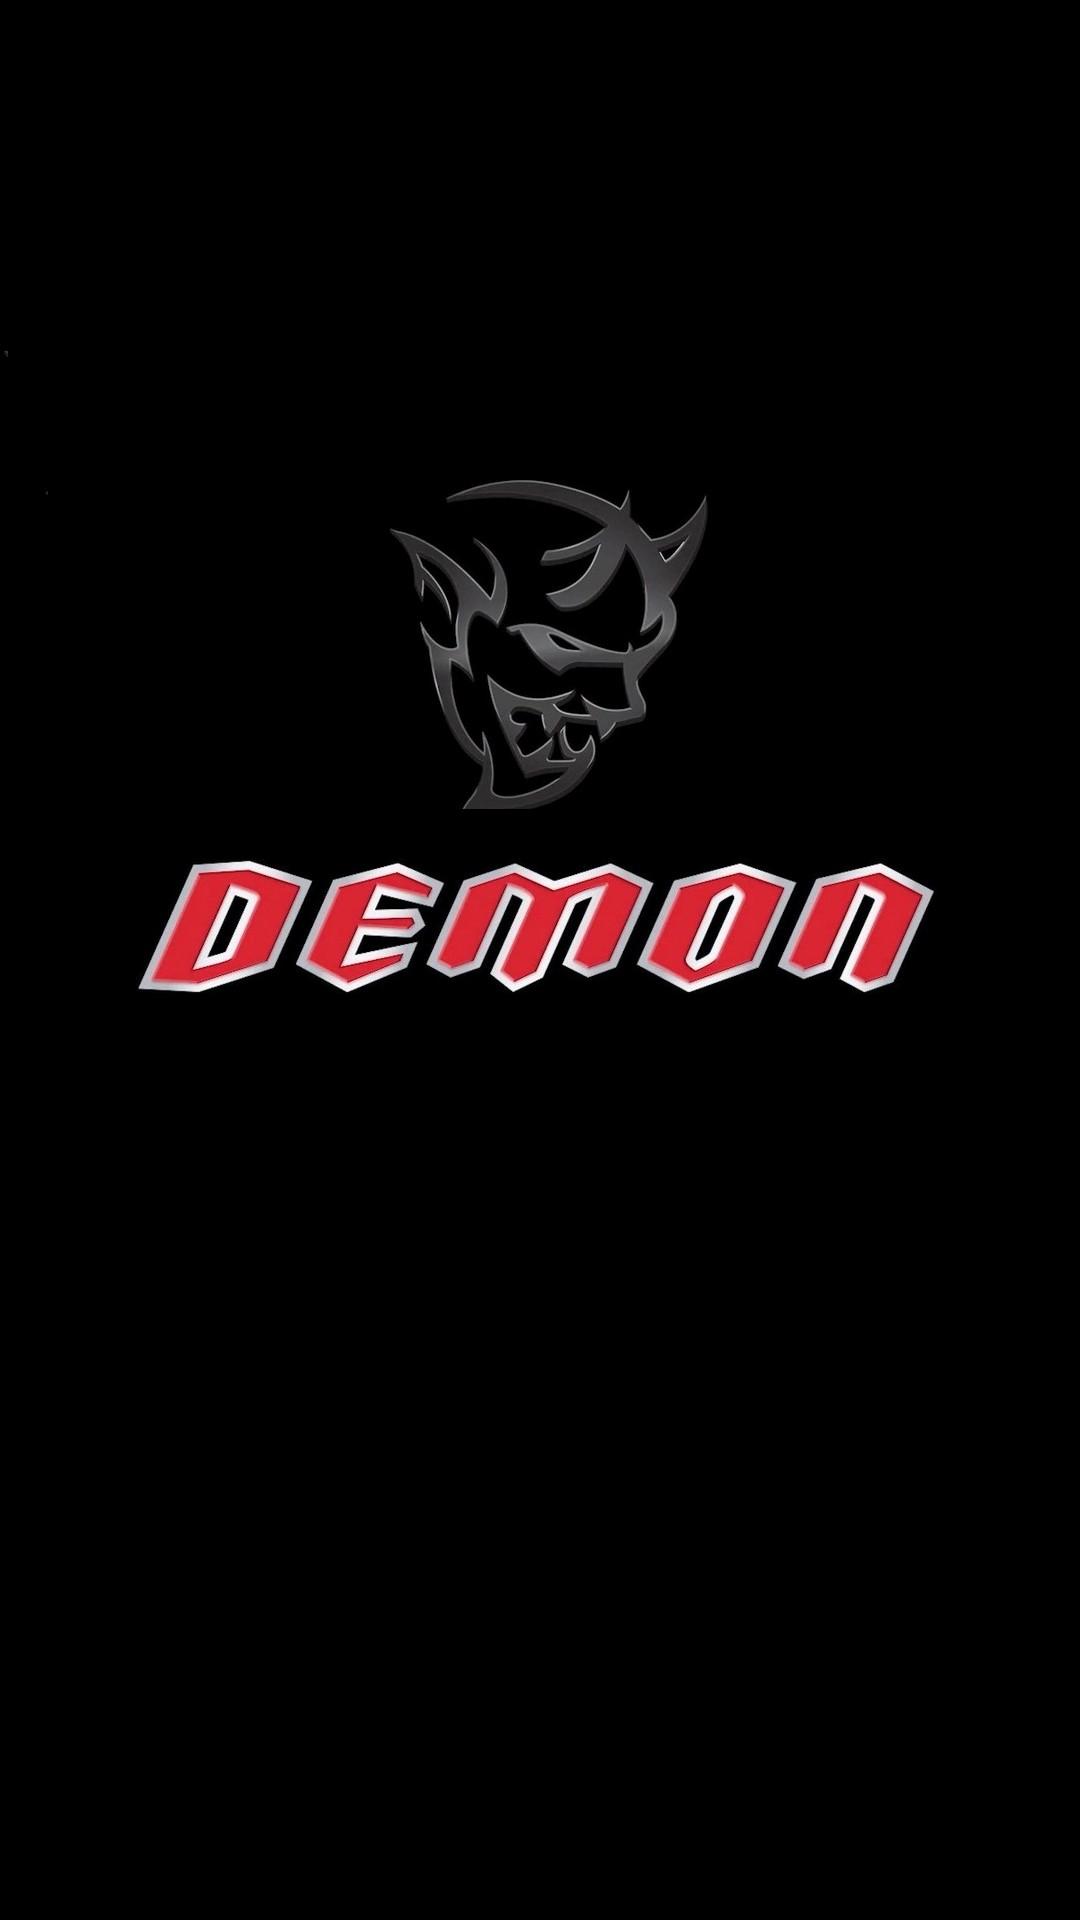 Dodge Demon Logo iPhone Wallpaper 3D iPhone Wallpaper